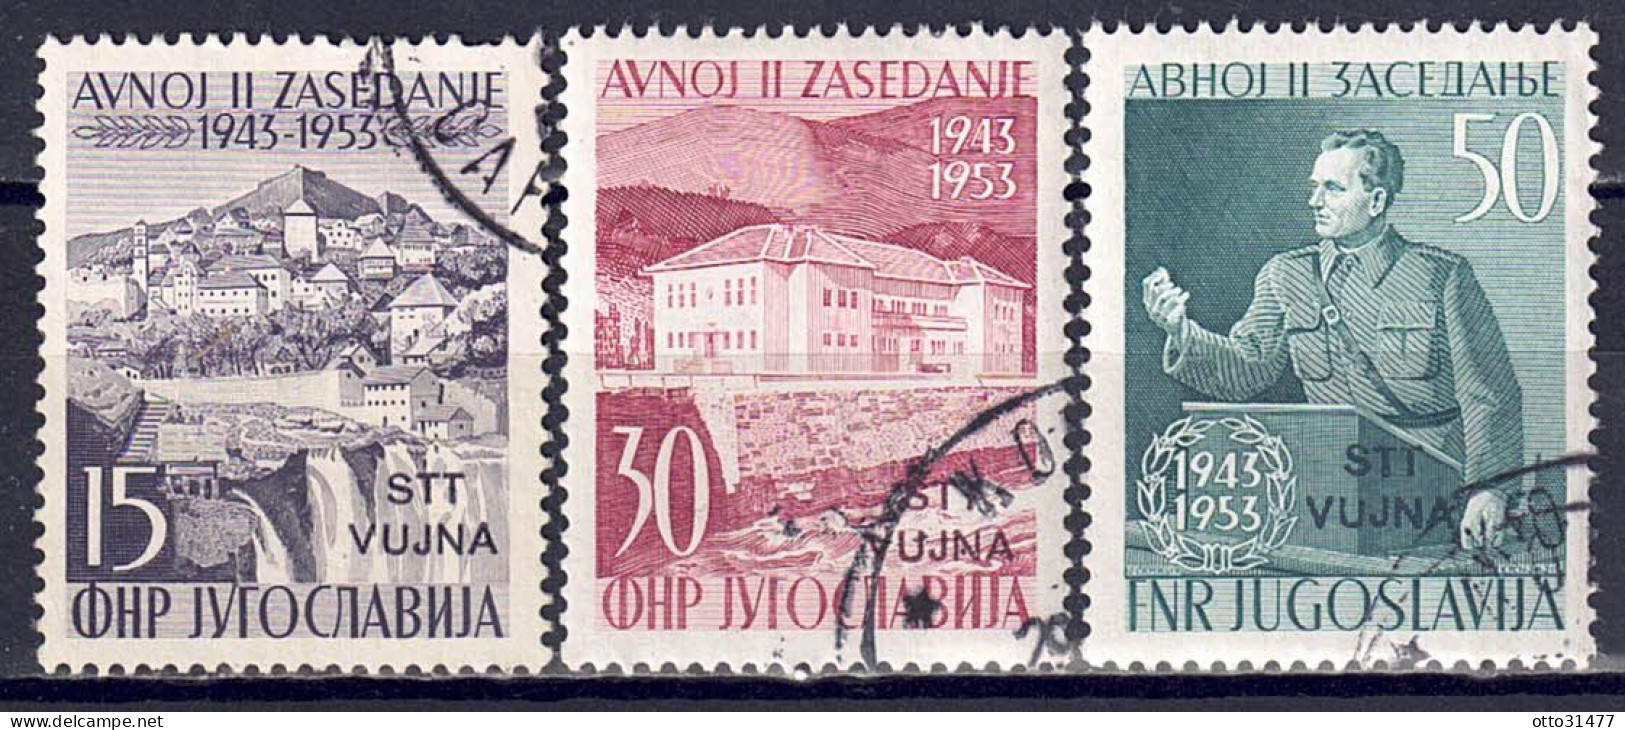 Italien / Triest Zone B - 1953 - AVNOJ, Nr. 107 - 109, Gestempelt / Used - Oblitérés